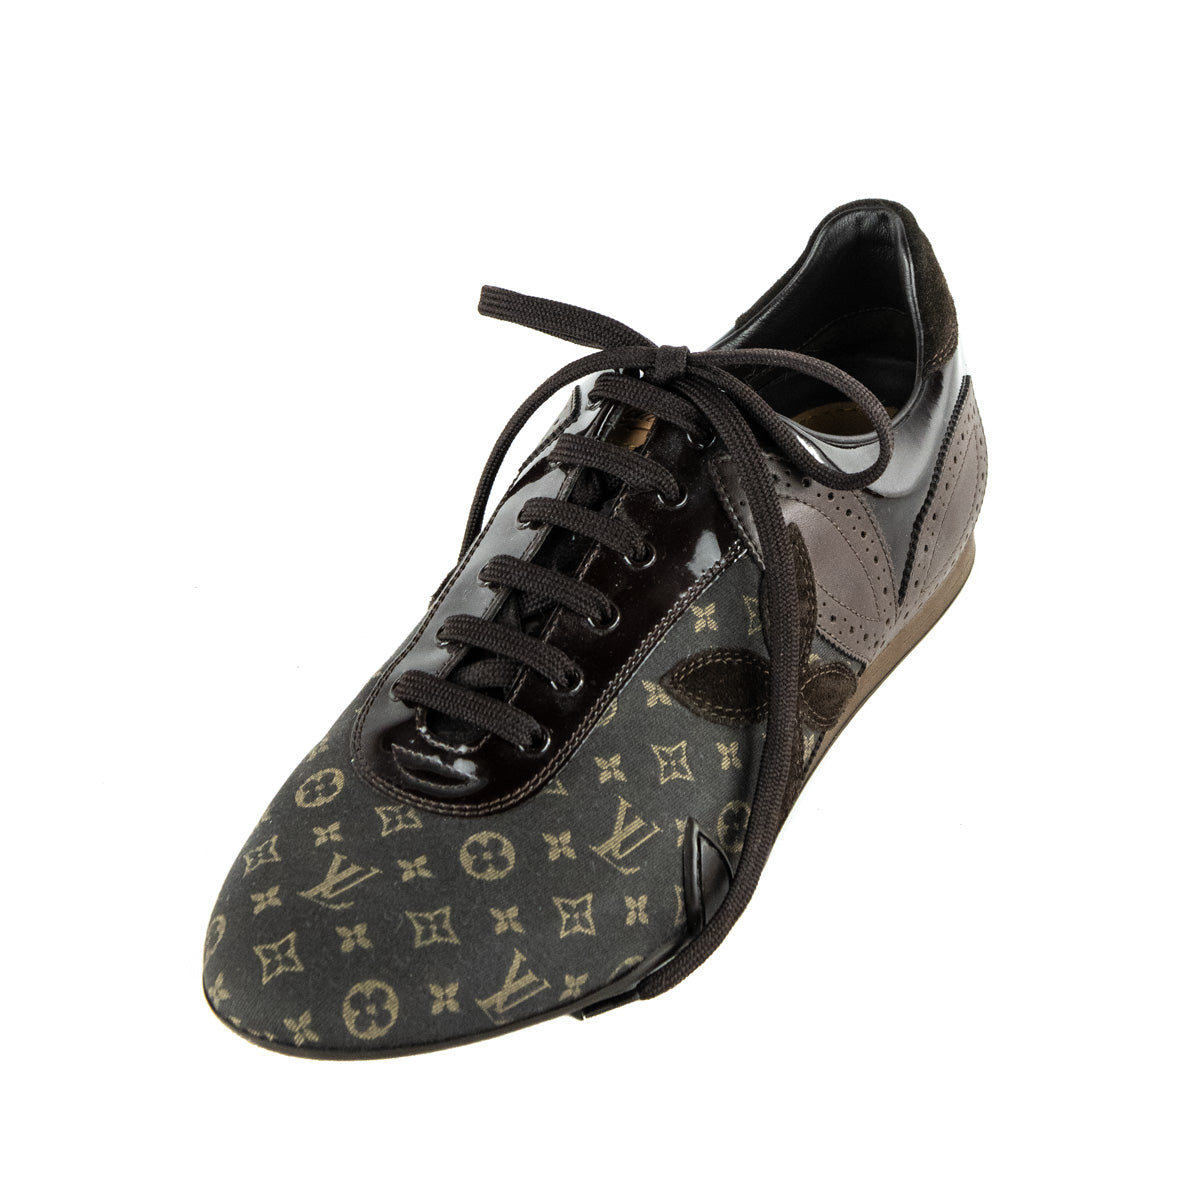 Louis Vuitton Trim Embellishment Sneakers